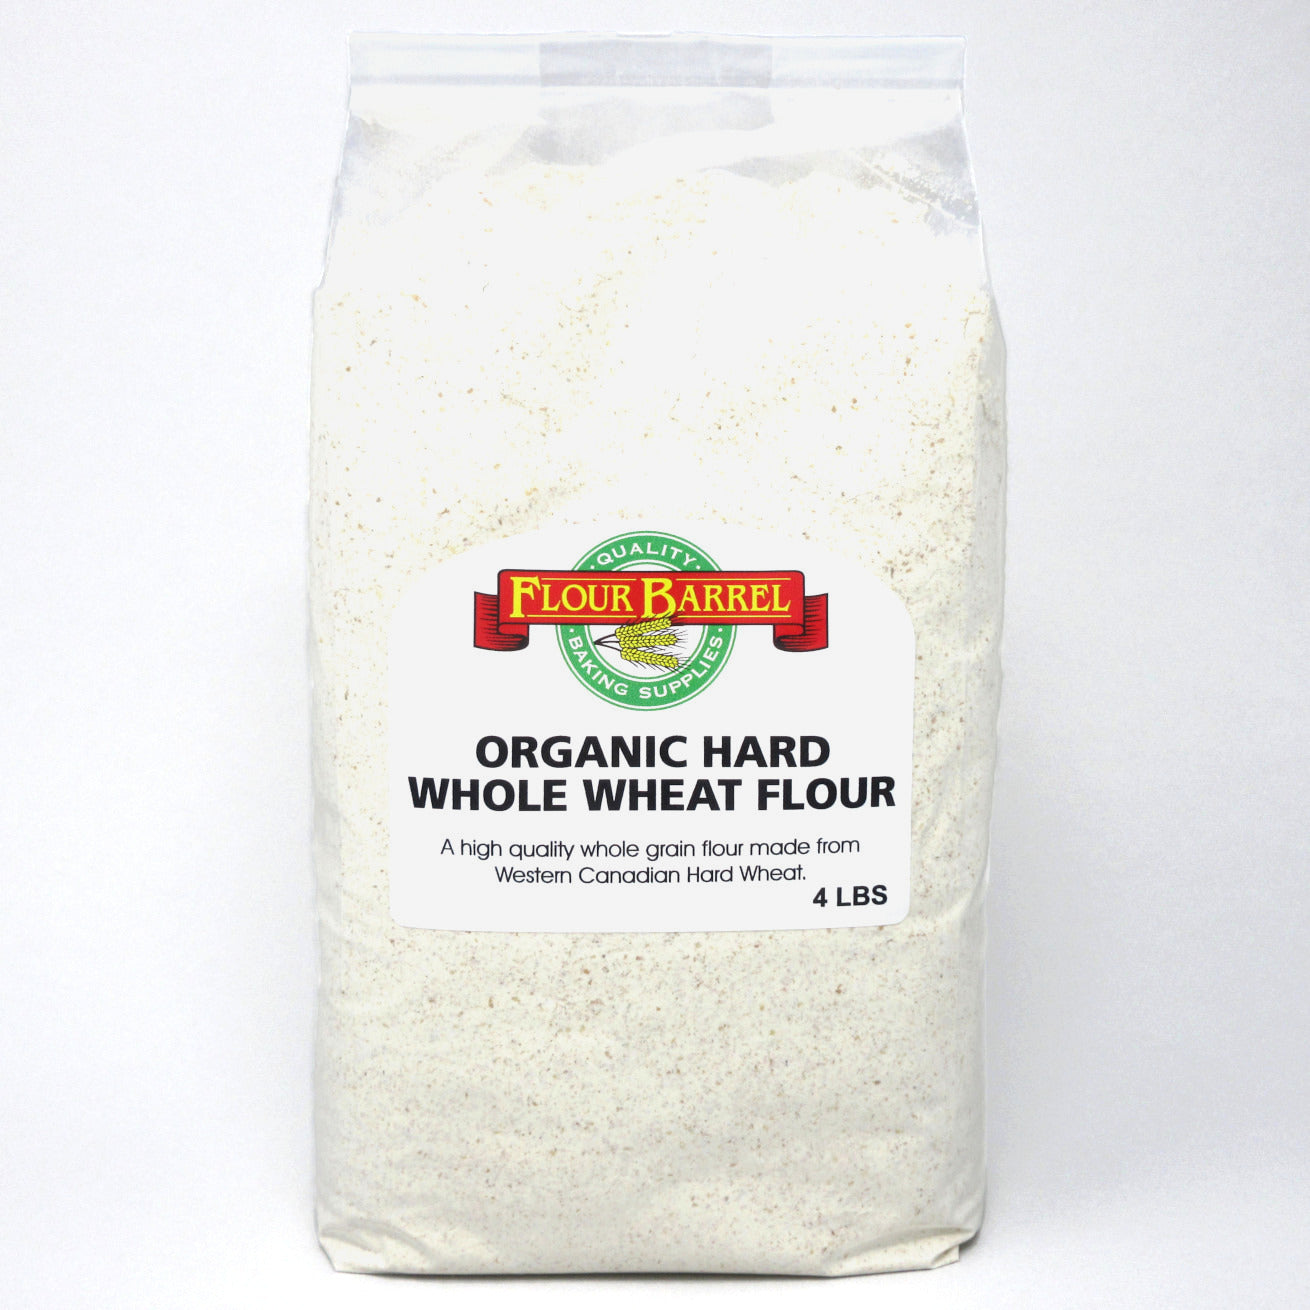 Flour Barrel product image - Organic Hard Whole Wheat Flour